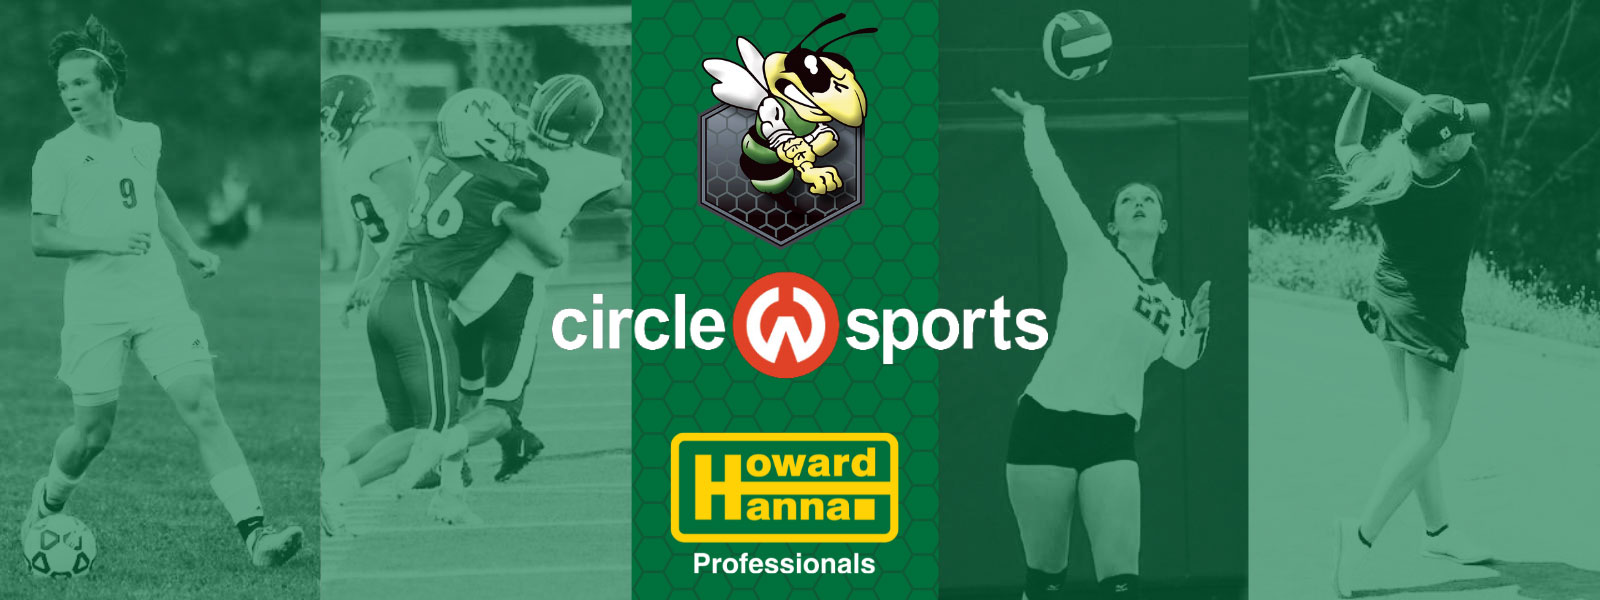 Circle W Sports, Howard Hanna Professionals Partner To Build Wellsboro Athletics Network